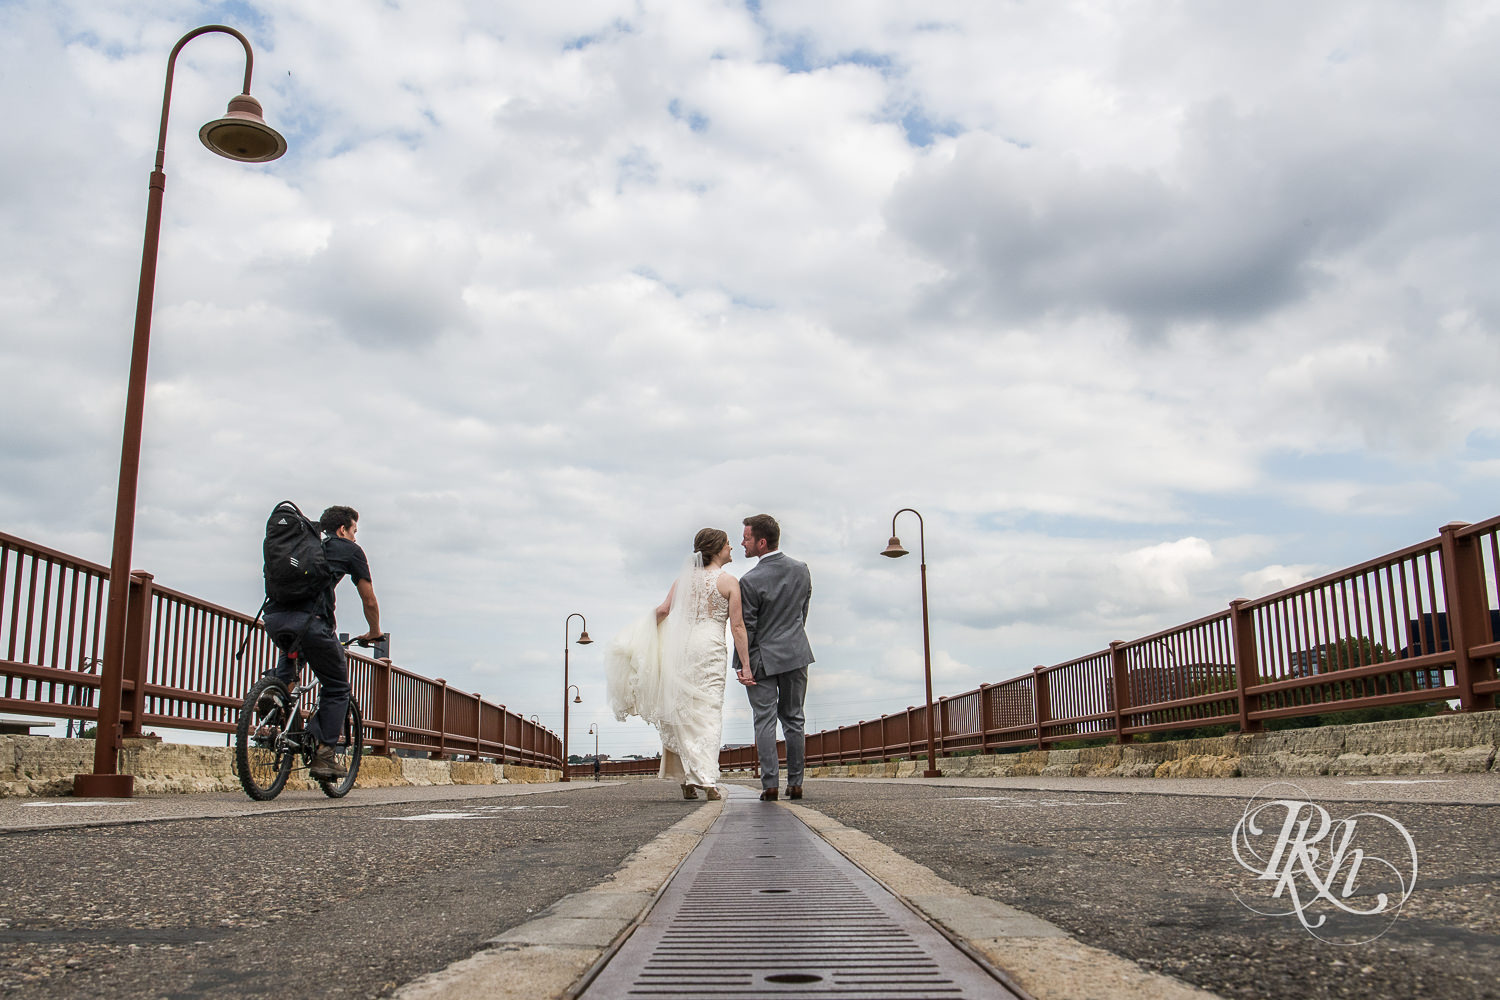 Bride and groom smile on the Stone Arch Bridge in Minneapolis, Minnesota.